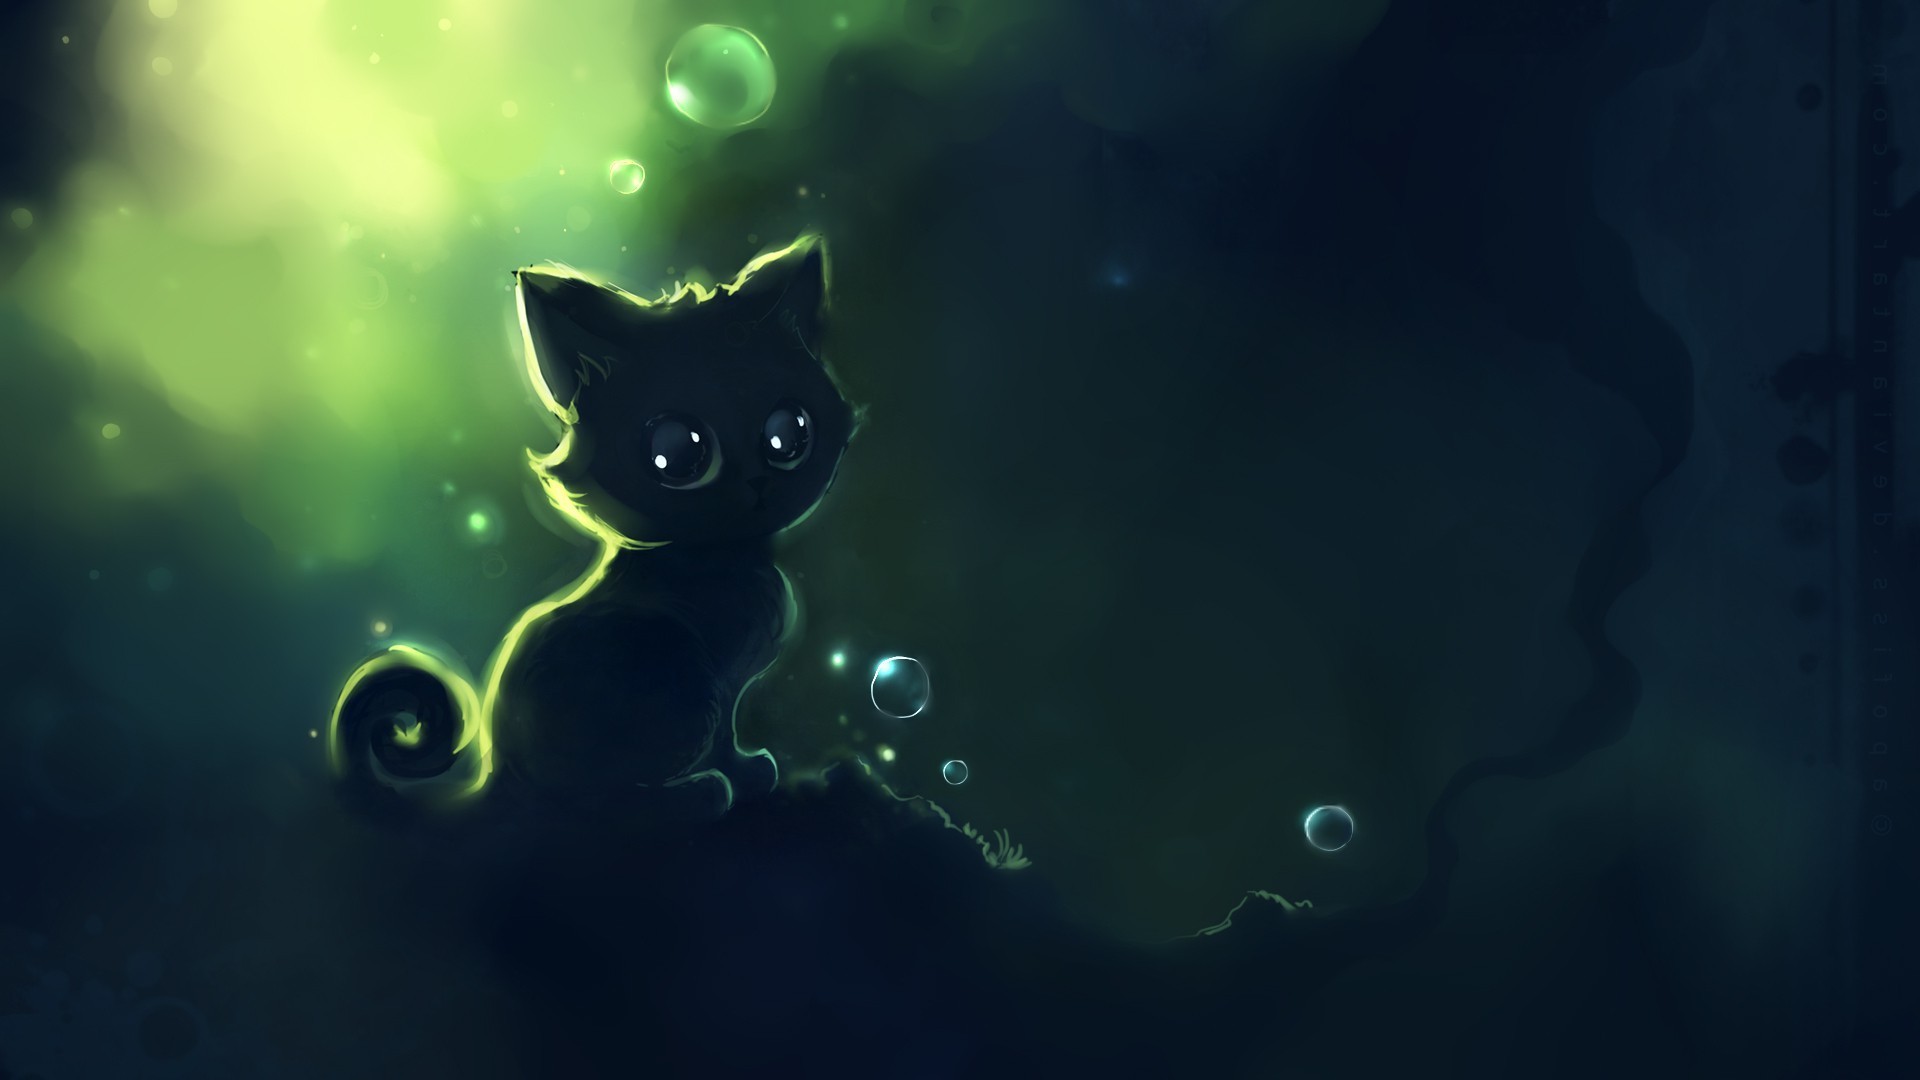 Free Download Cute Kitten In The Dark Wallpaper Dark 1920X1080